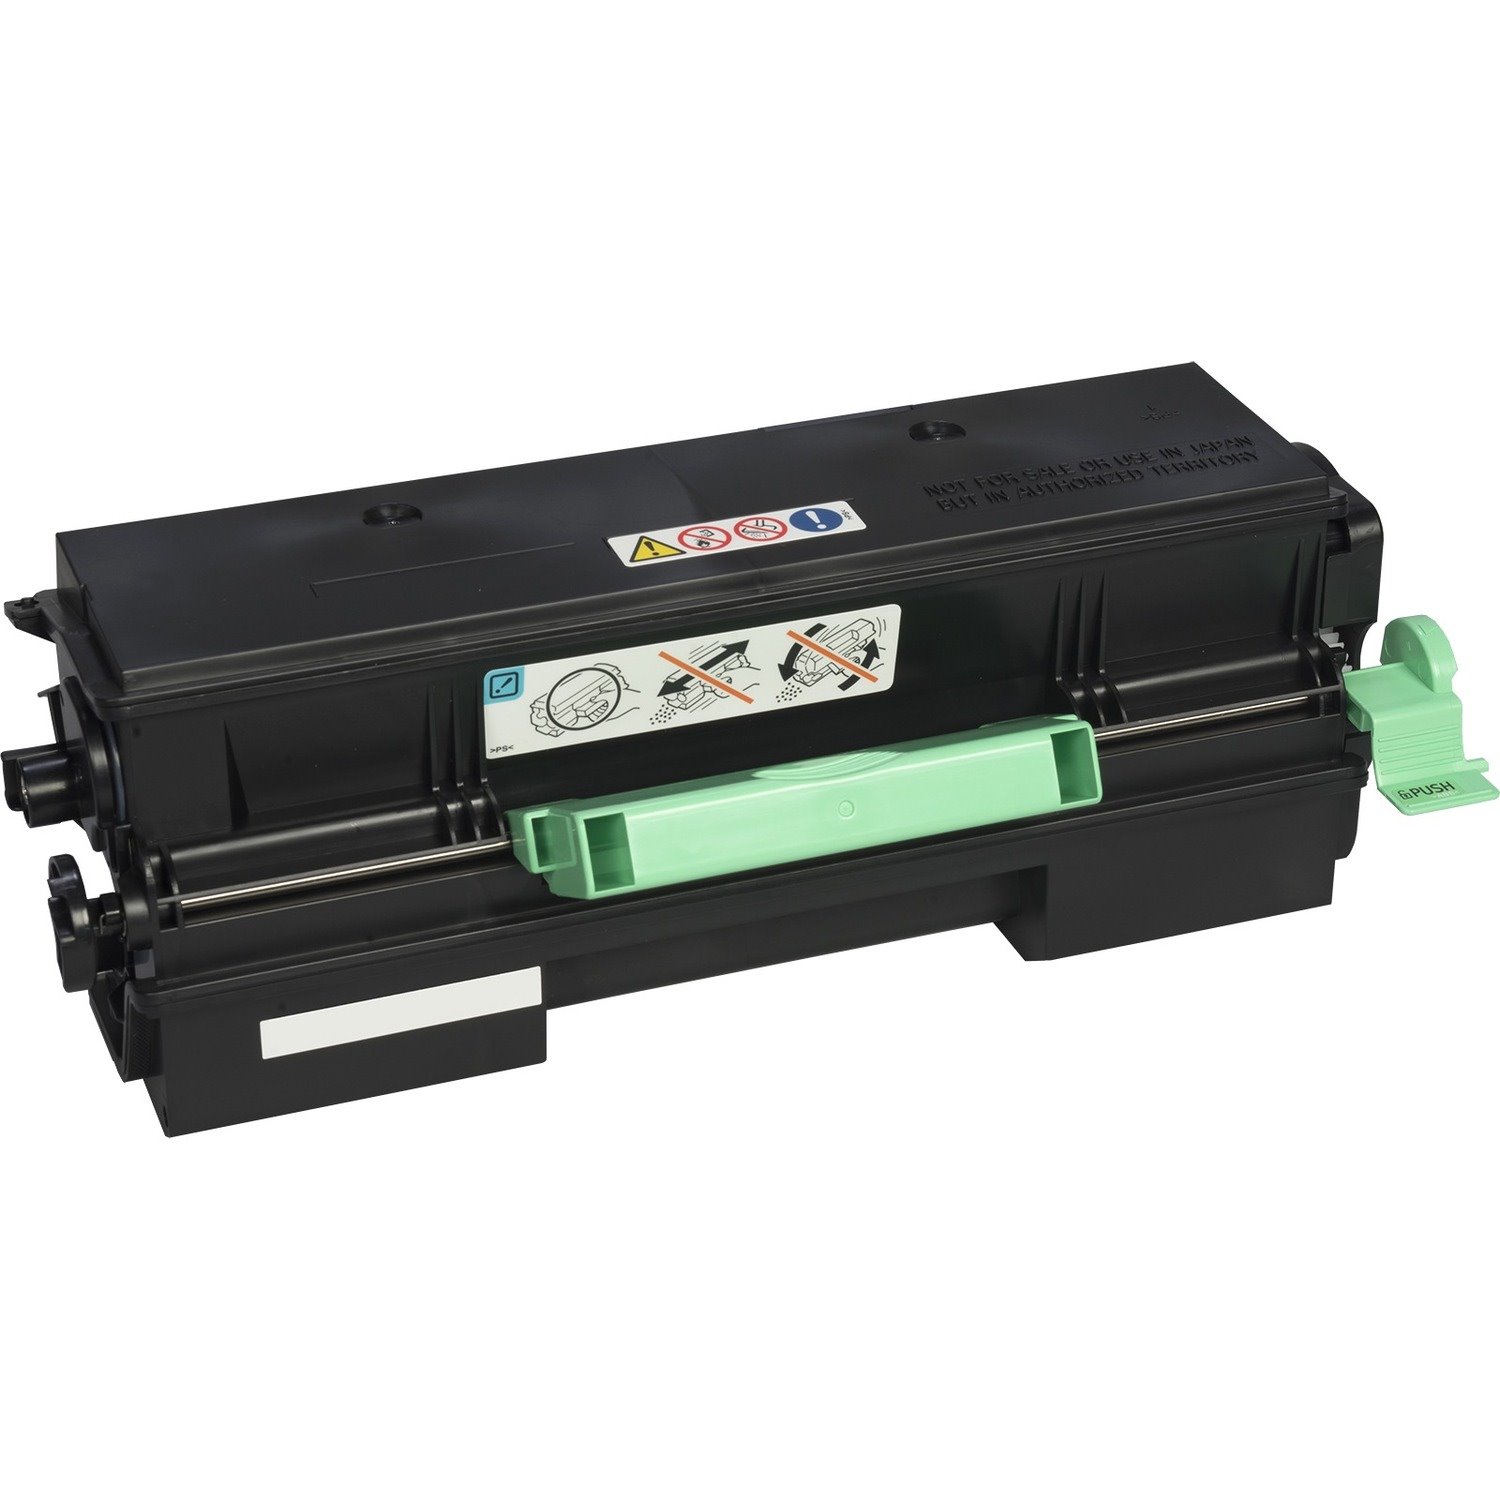 Ricoh SP 4500LA Original Laser Toner Cartridge - Black Pack